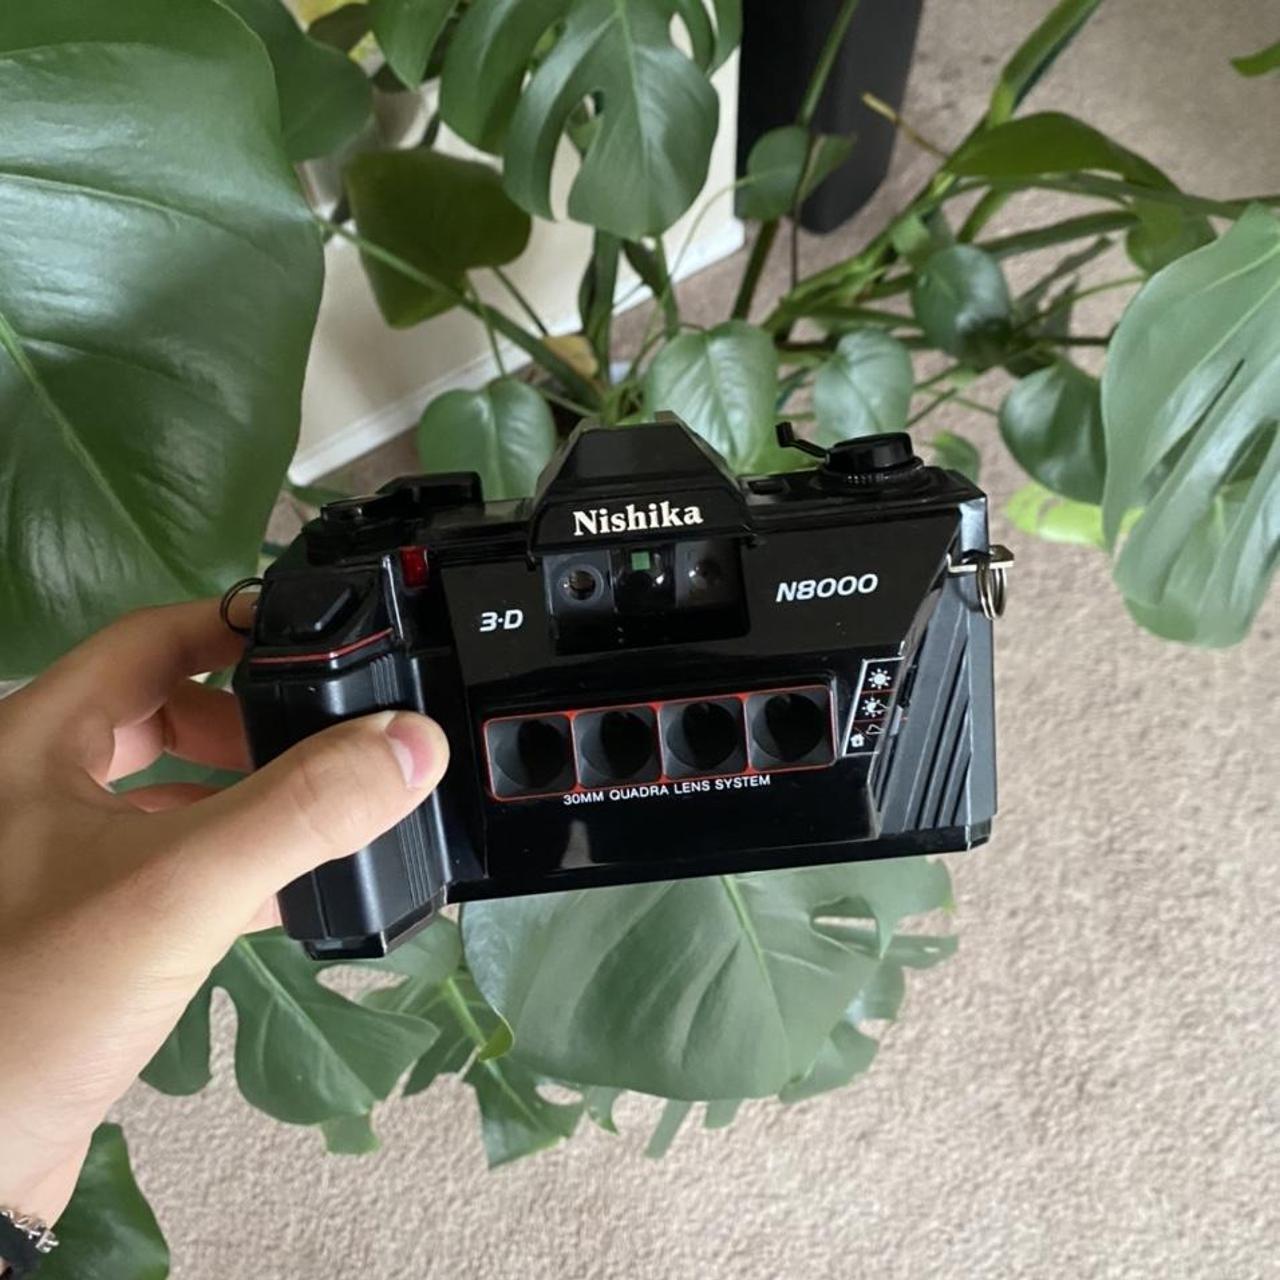 Product Image 1 - Nishika N8000 3D 35mm camera.